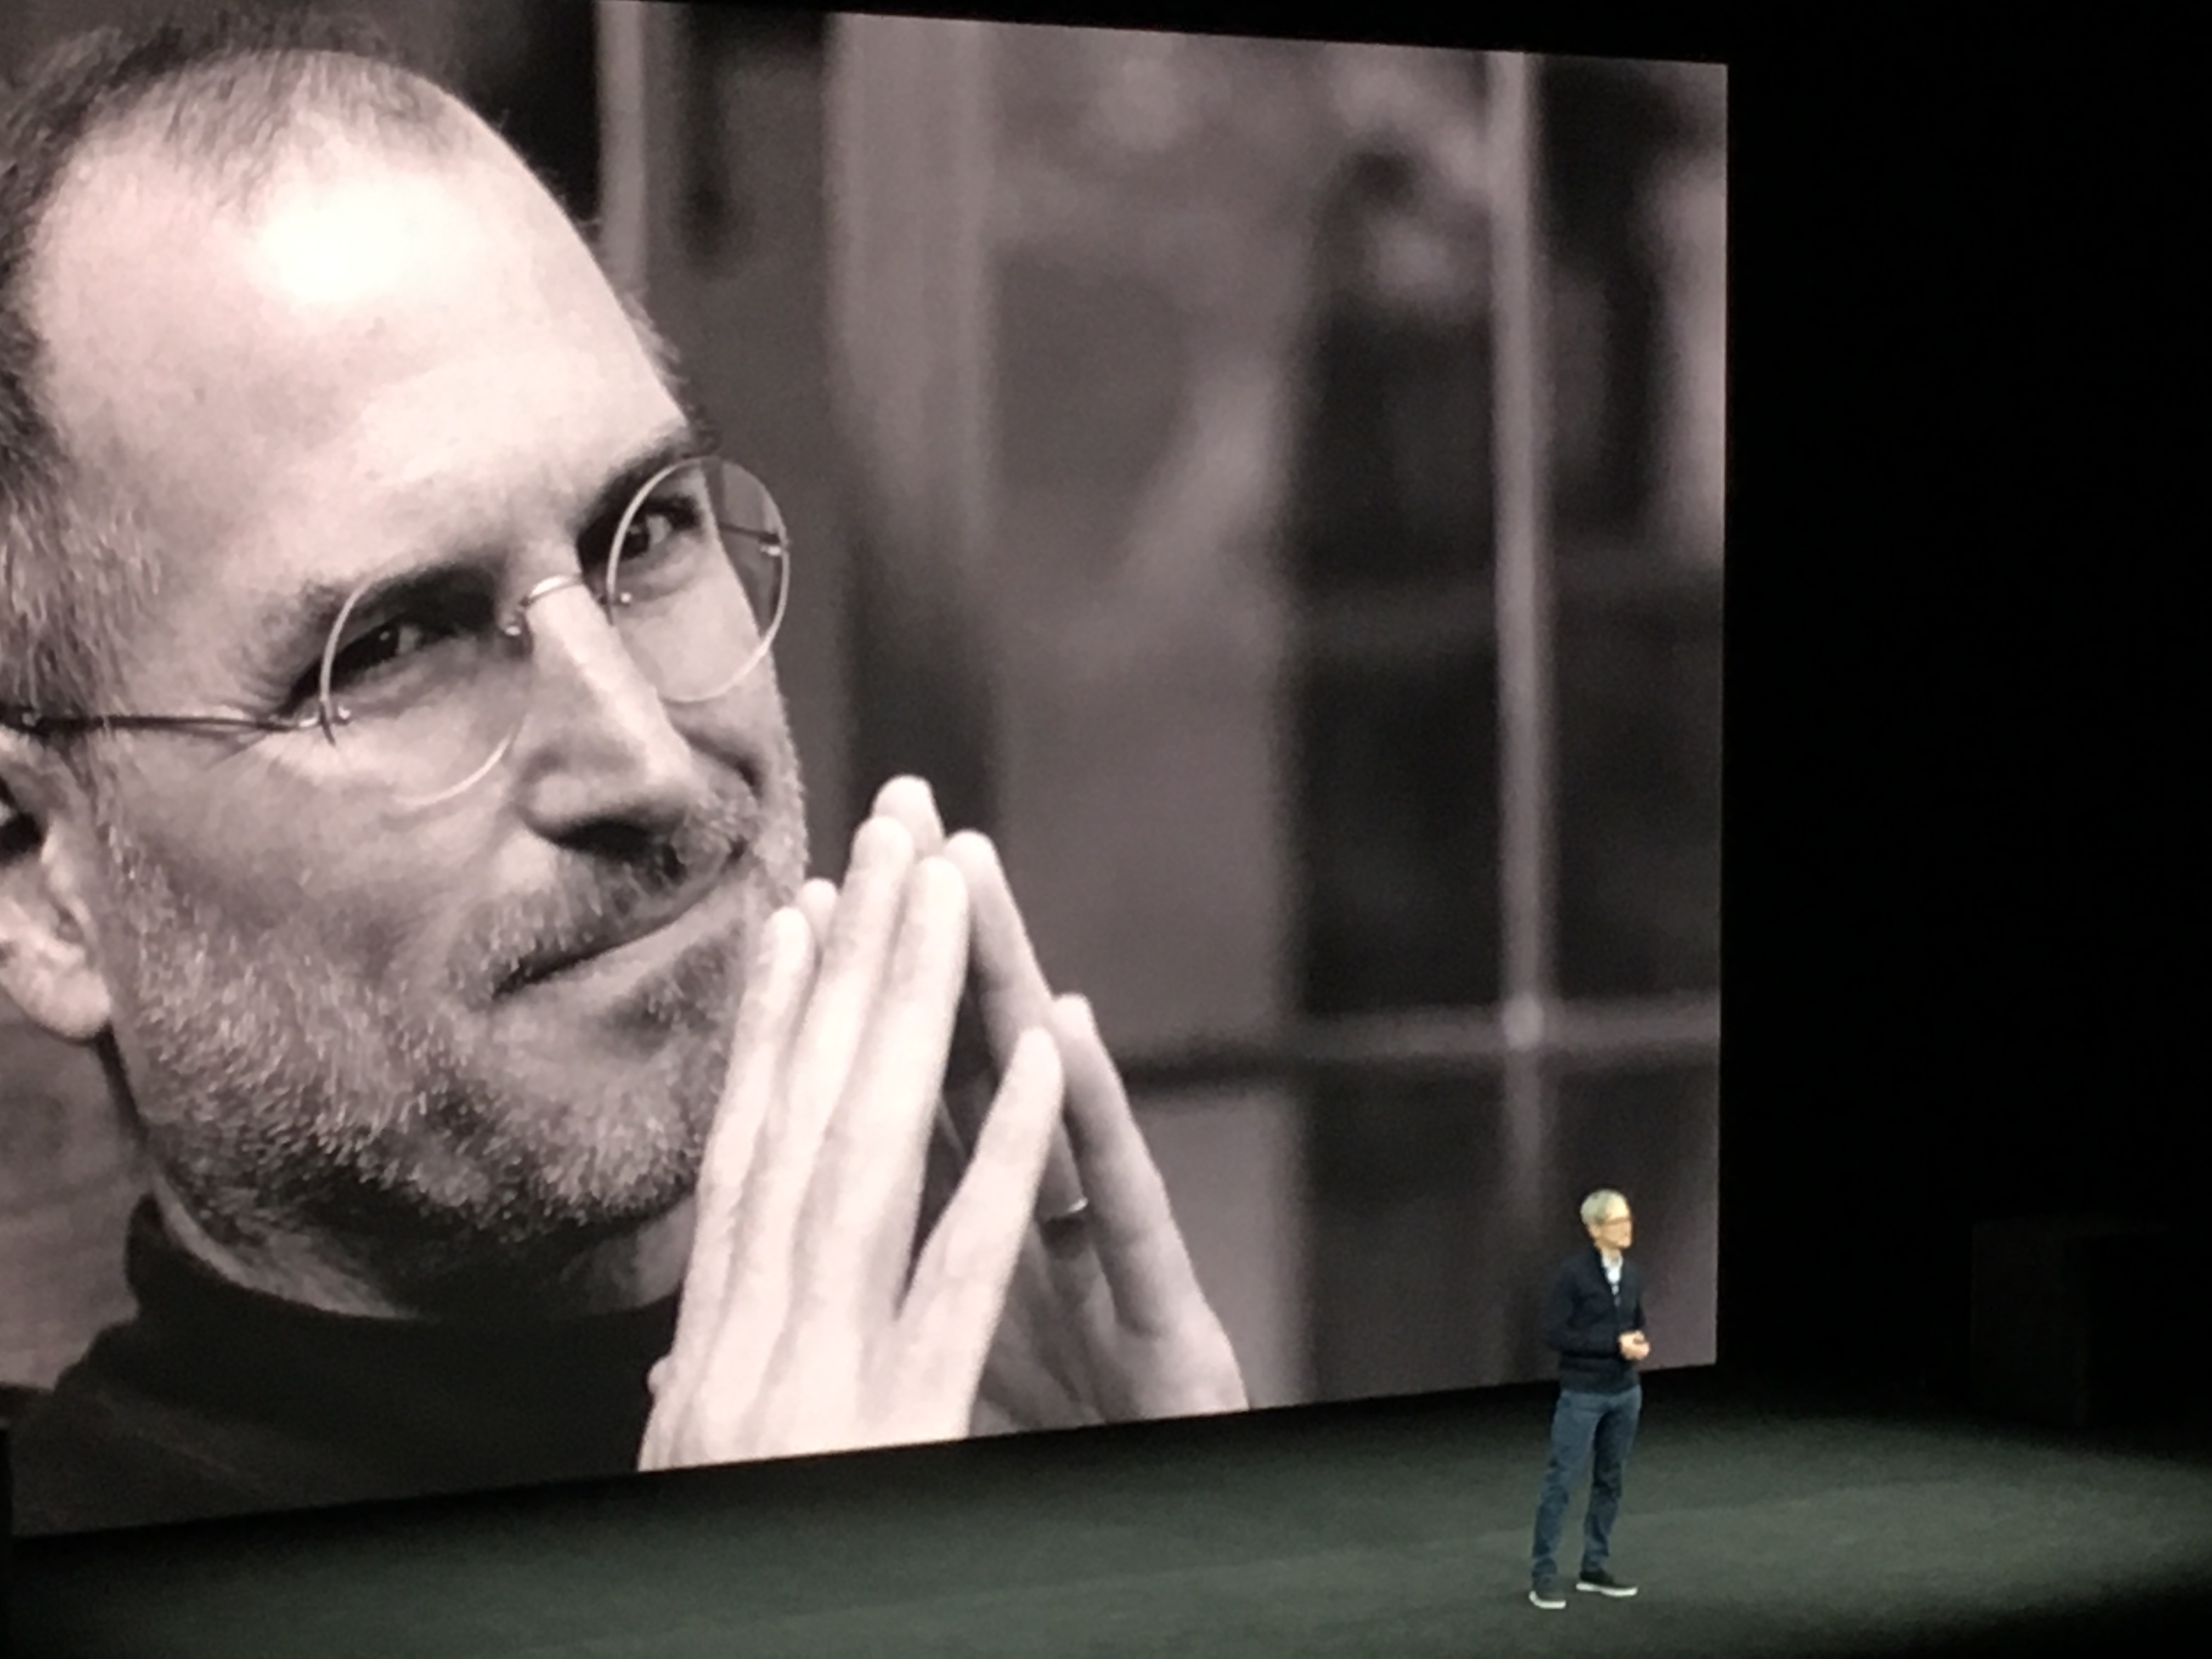 Steve Jobs’ legacy & The iPhone X